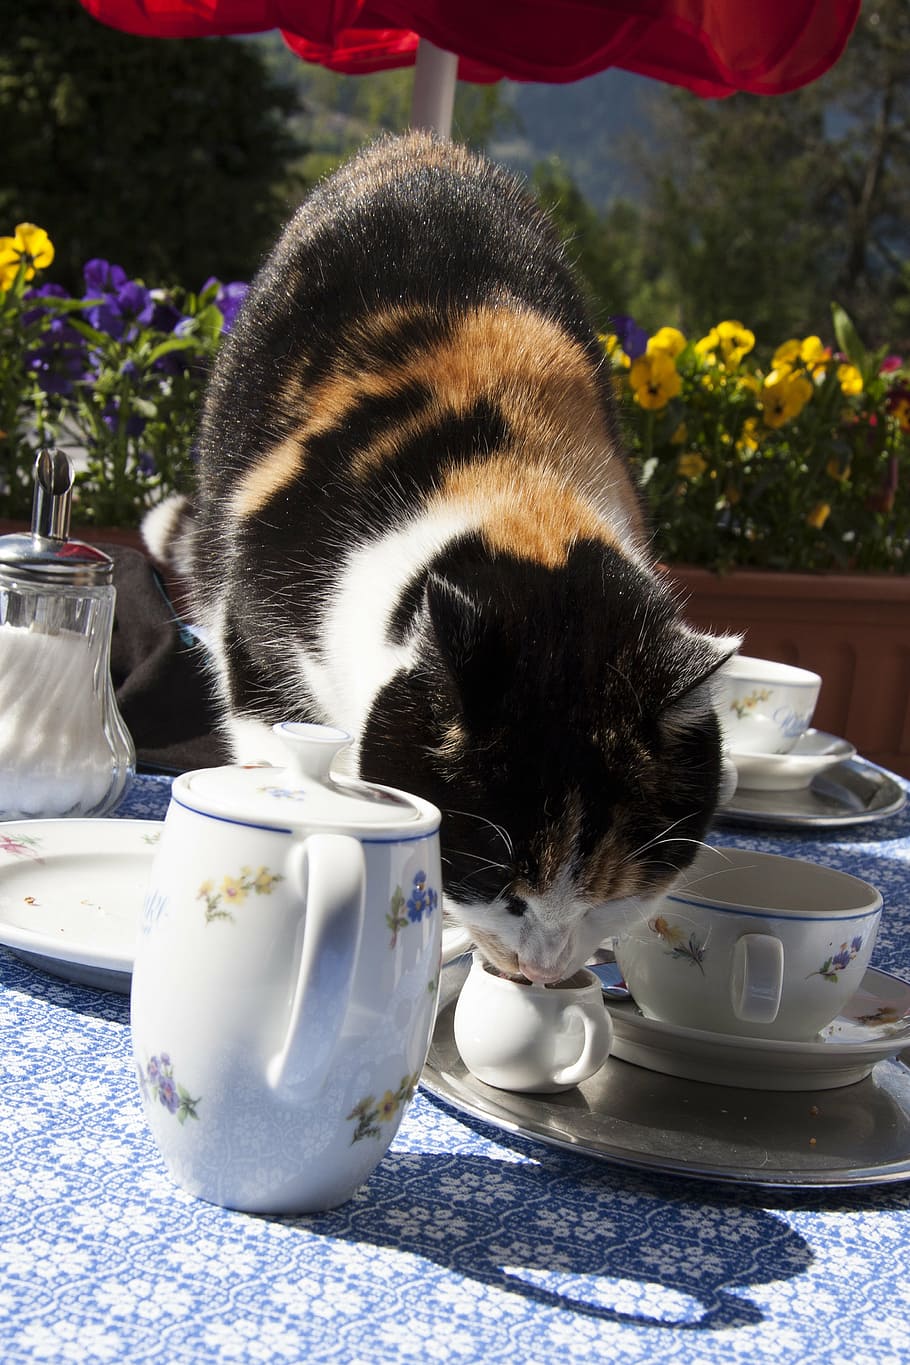 calico, gato bebiendo, taza de té, gato, goloso, lamer, bandido de leche, desayuno, café, taza